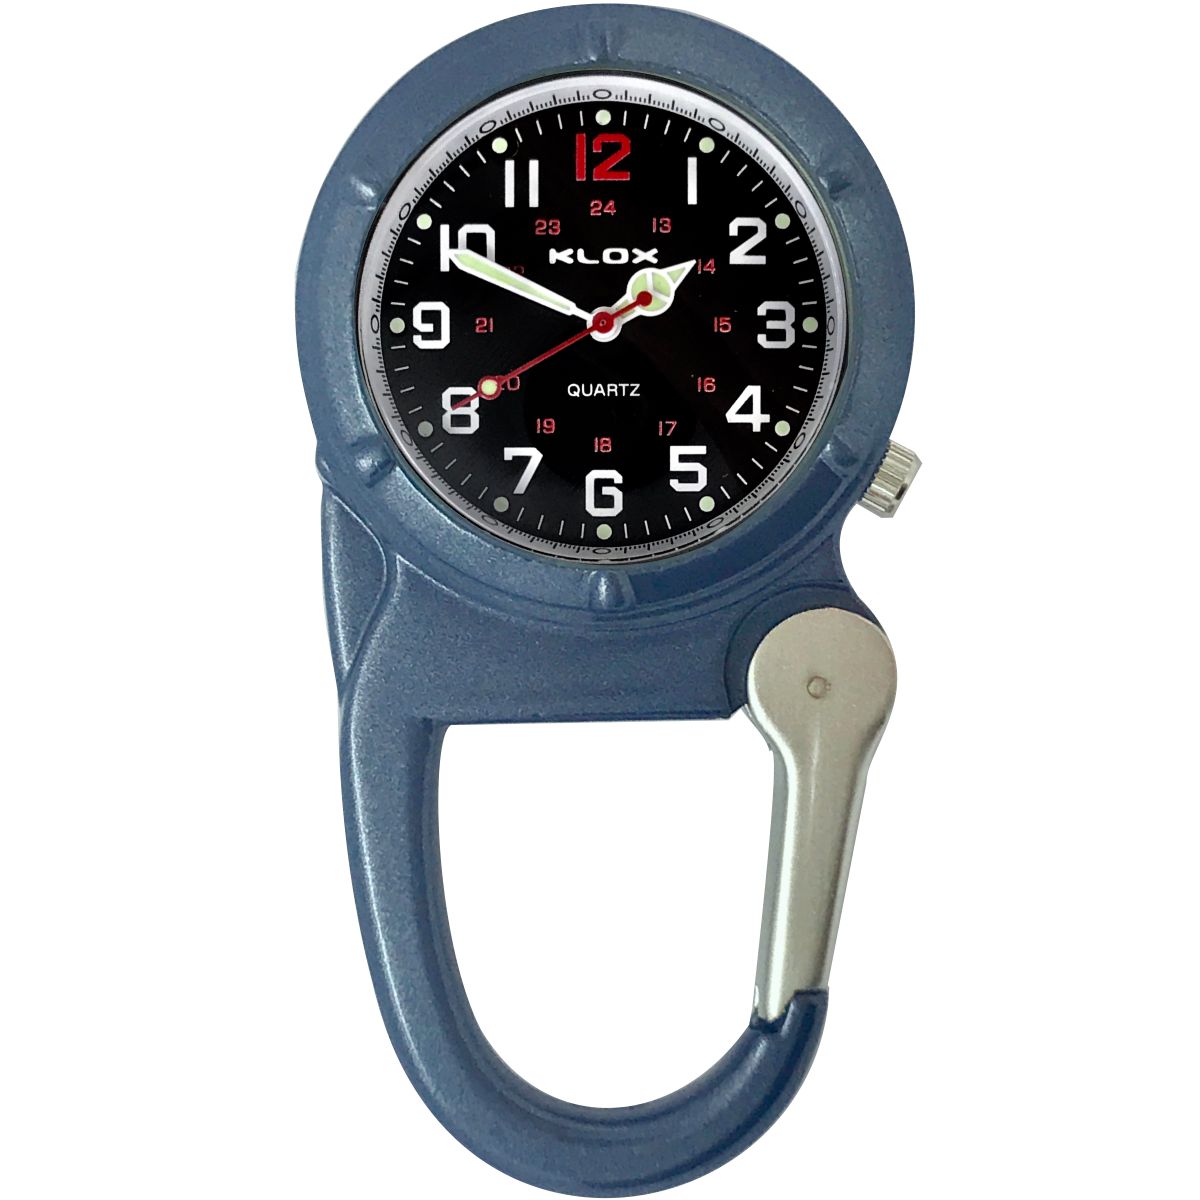 Metal Carabiner Clip Watch - BLUE - BLACK Dial